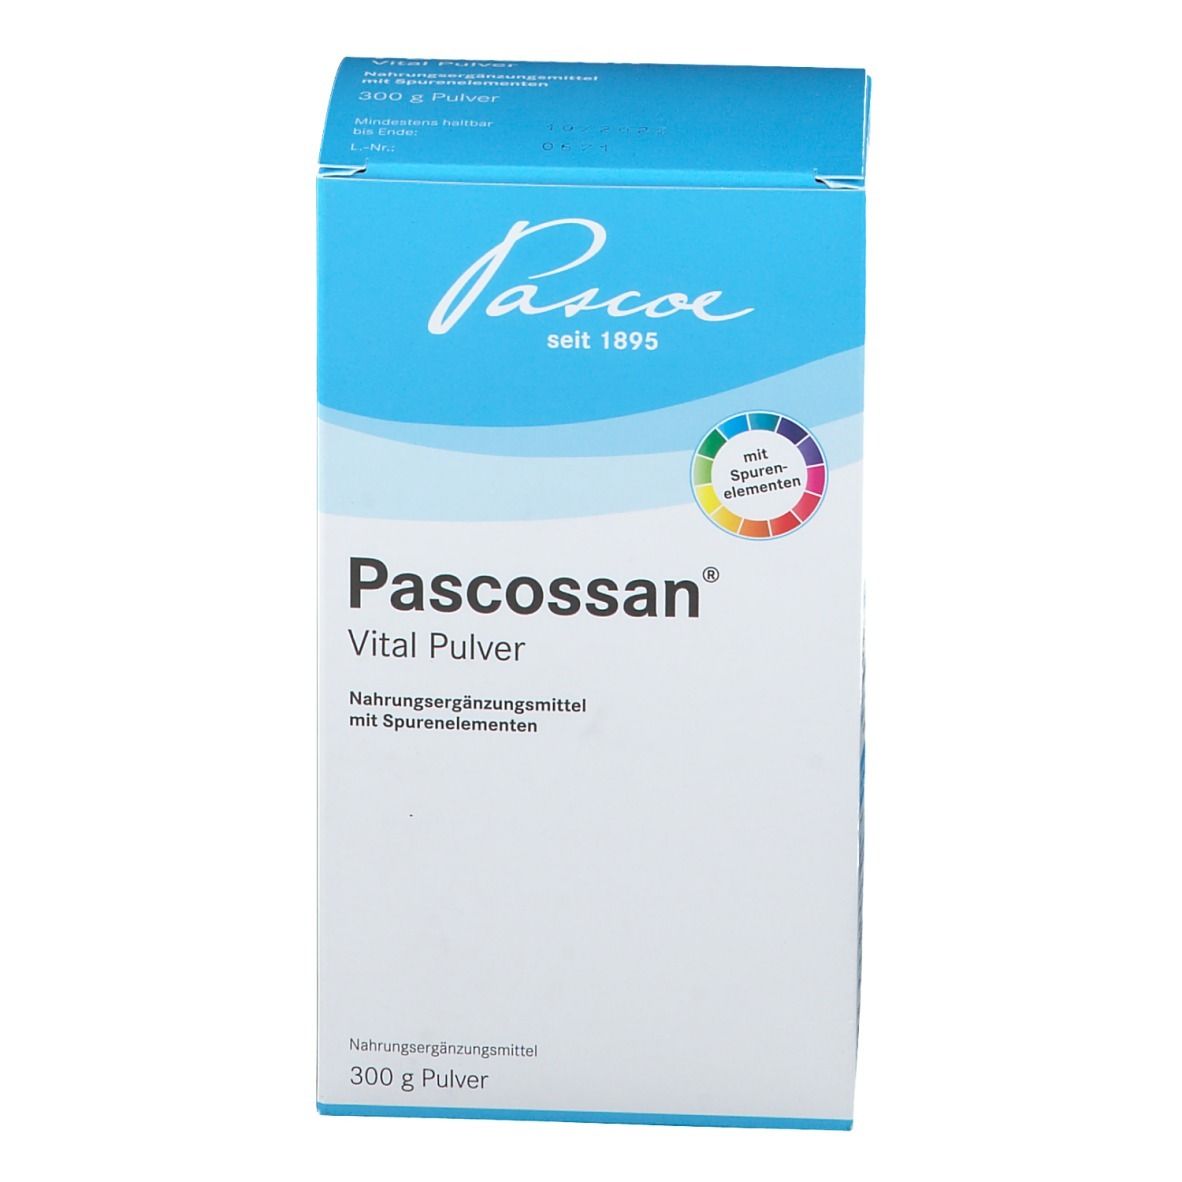 Pascossan® Vital Pulver